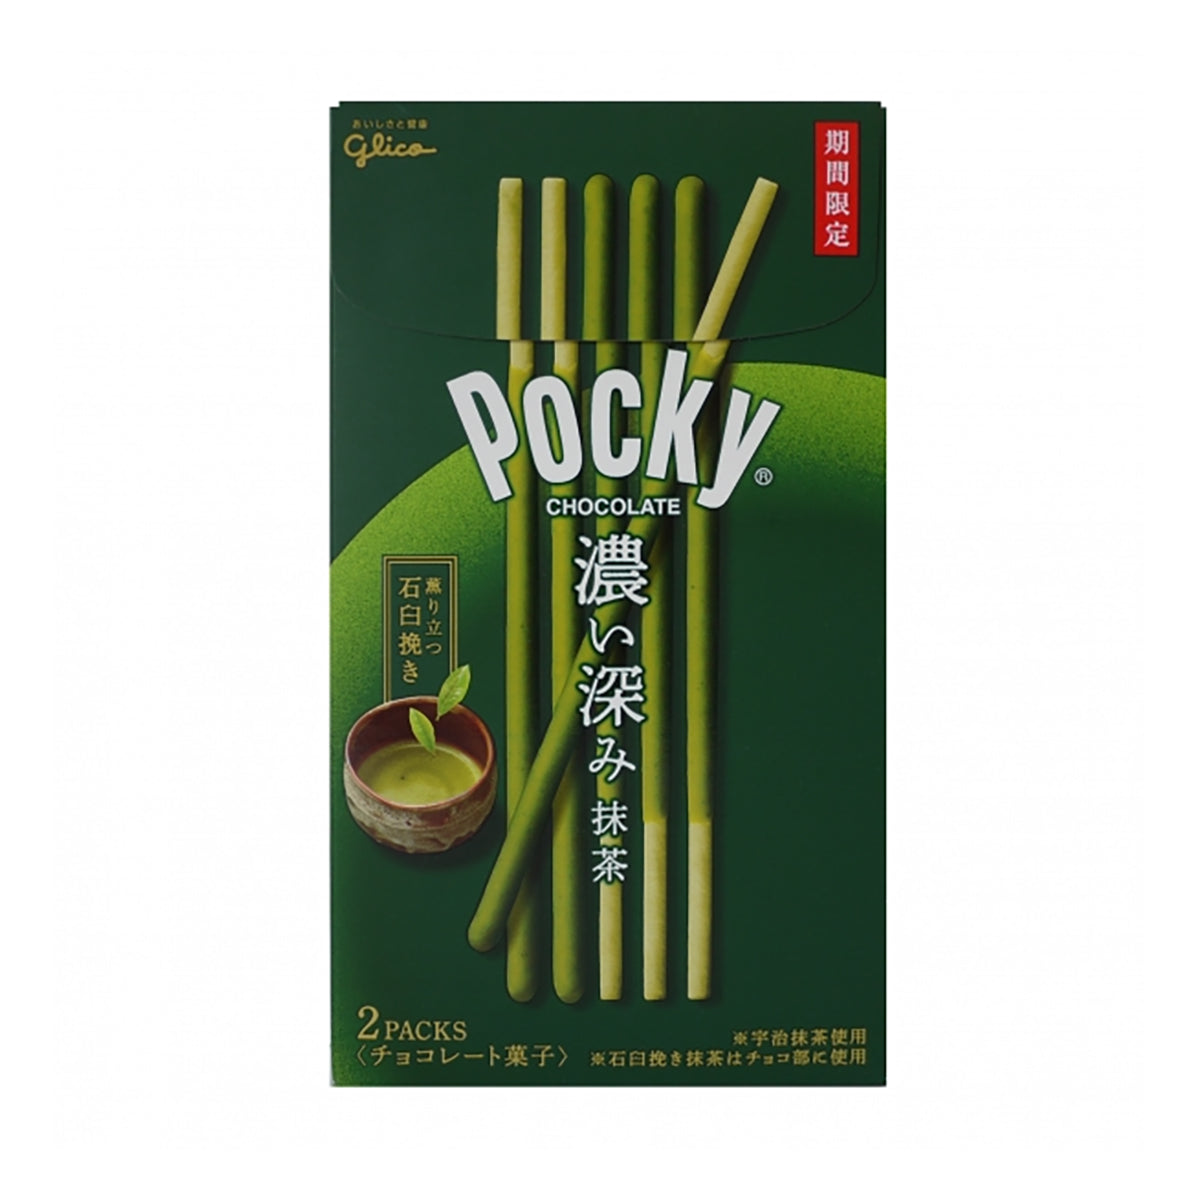 pocky double rich matcha green tea biscuit sticks - 2.05oz